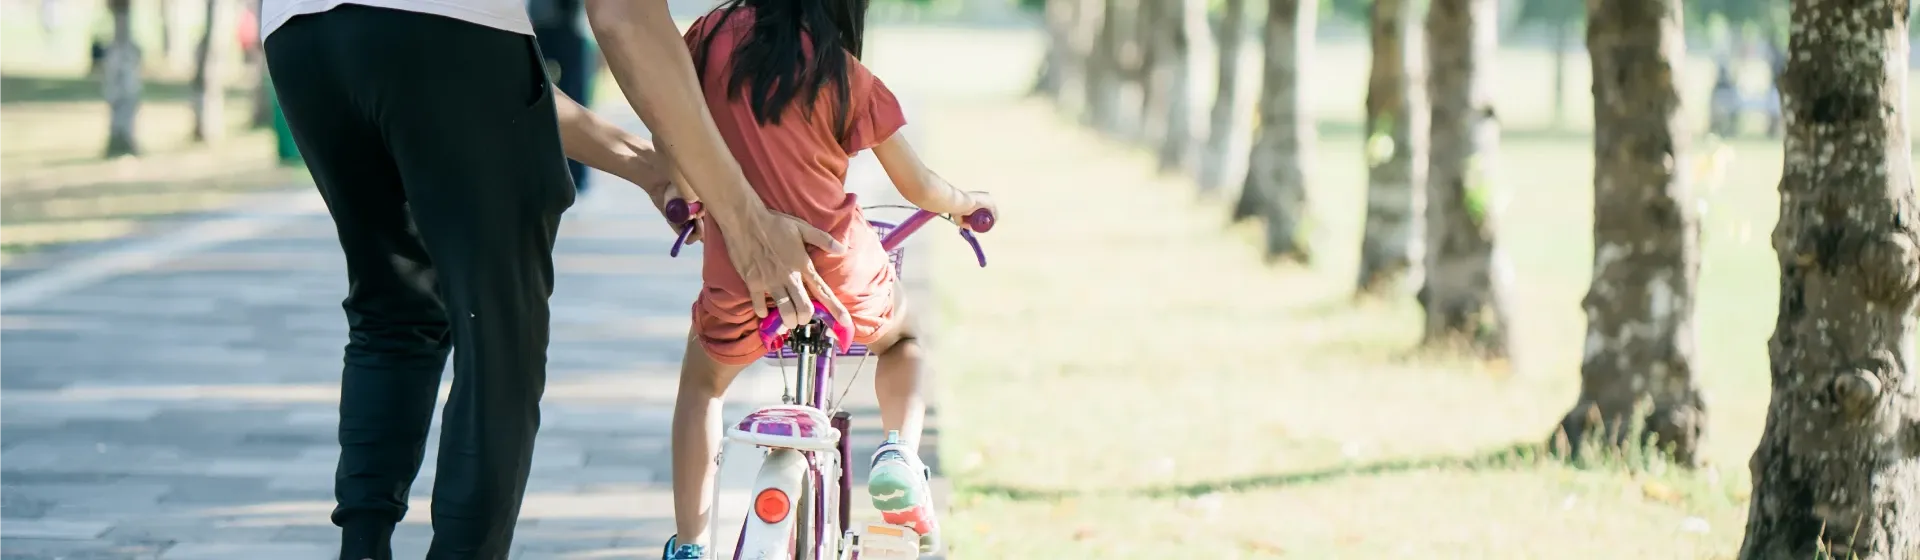 Bicicleta infantil feminina: 8 modelos para as pequenas